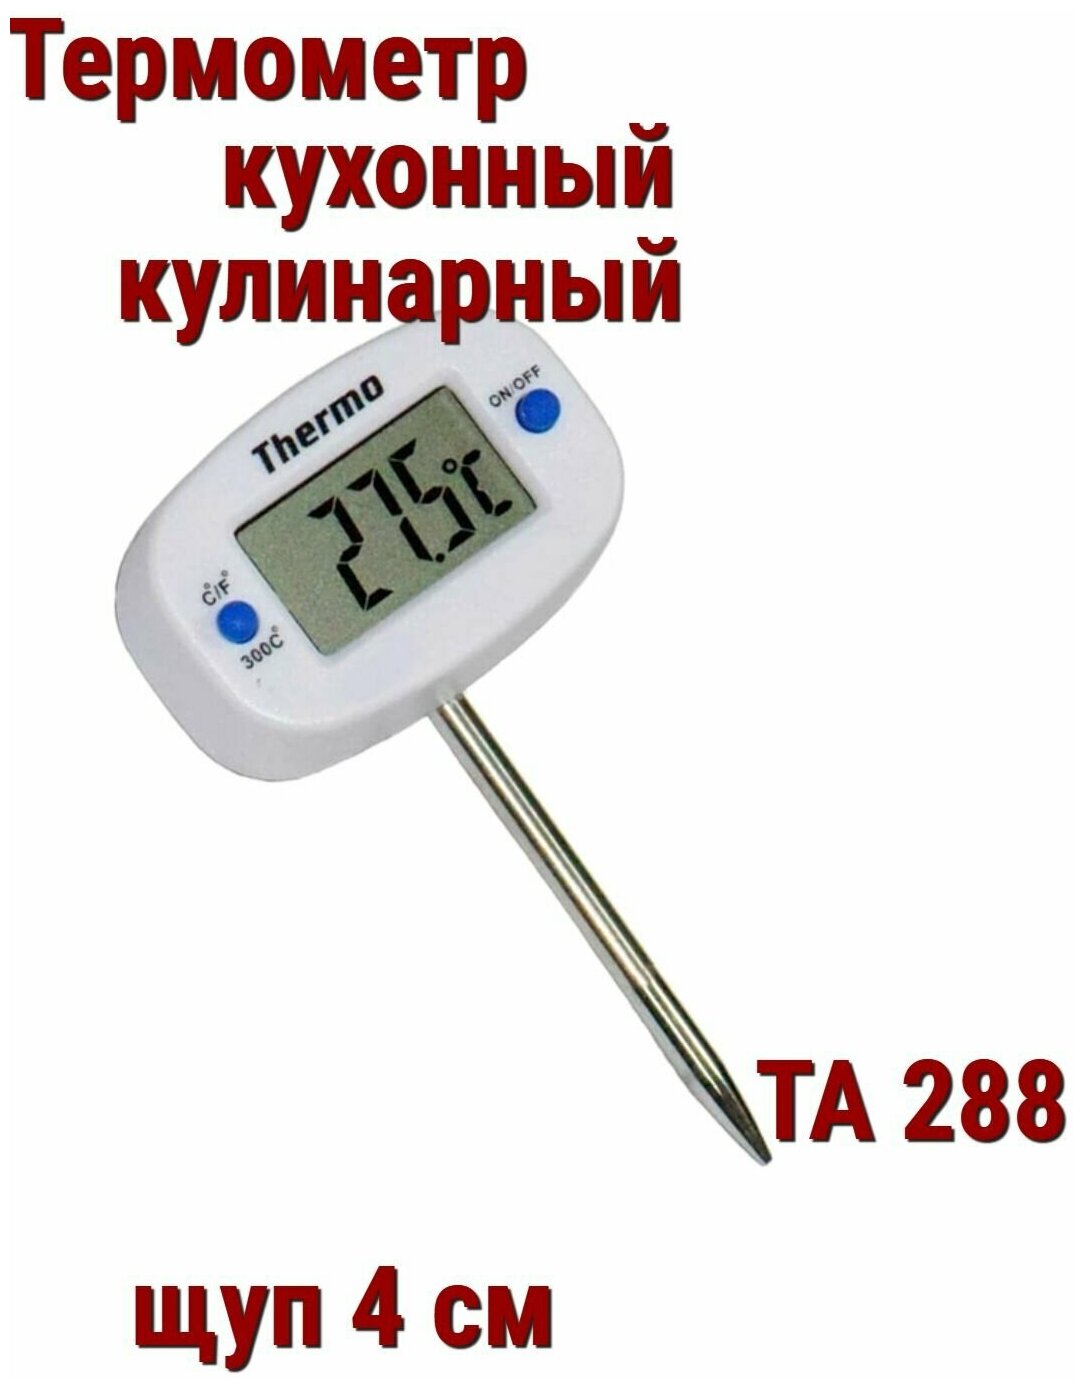 Термометр электронный кухонный/кулинарный ТА-288 щуп 4 см - фотография № 8